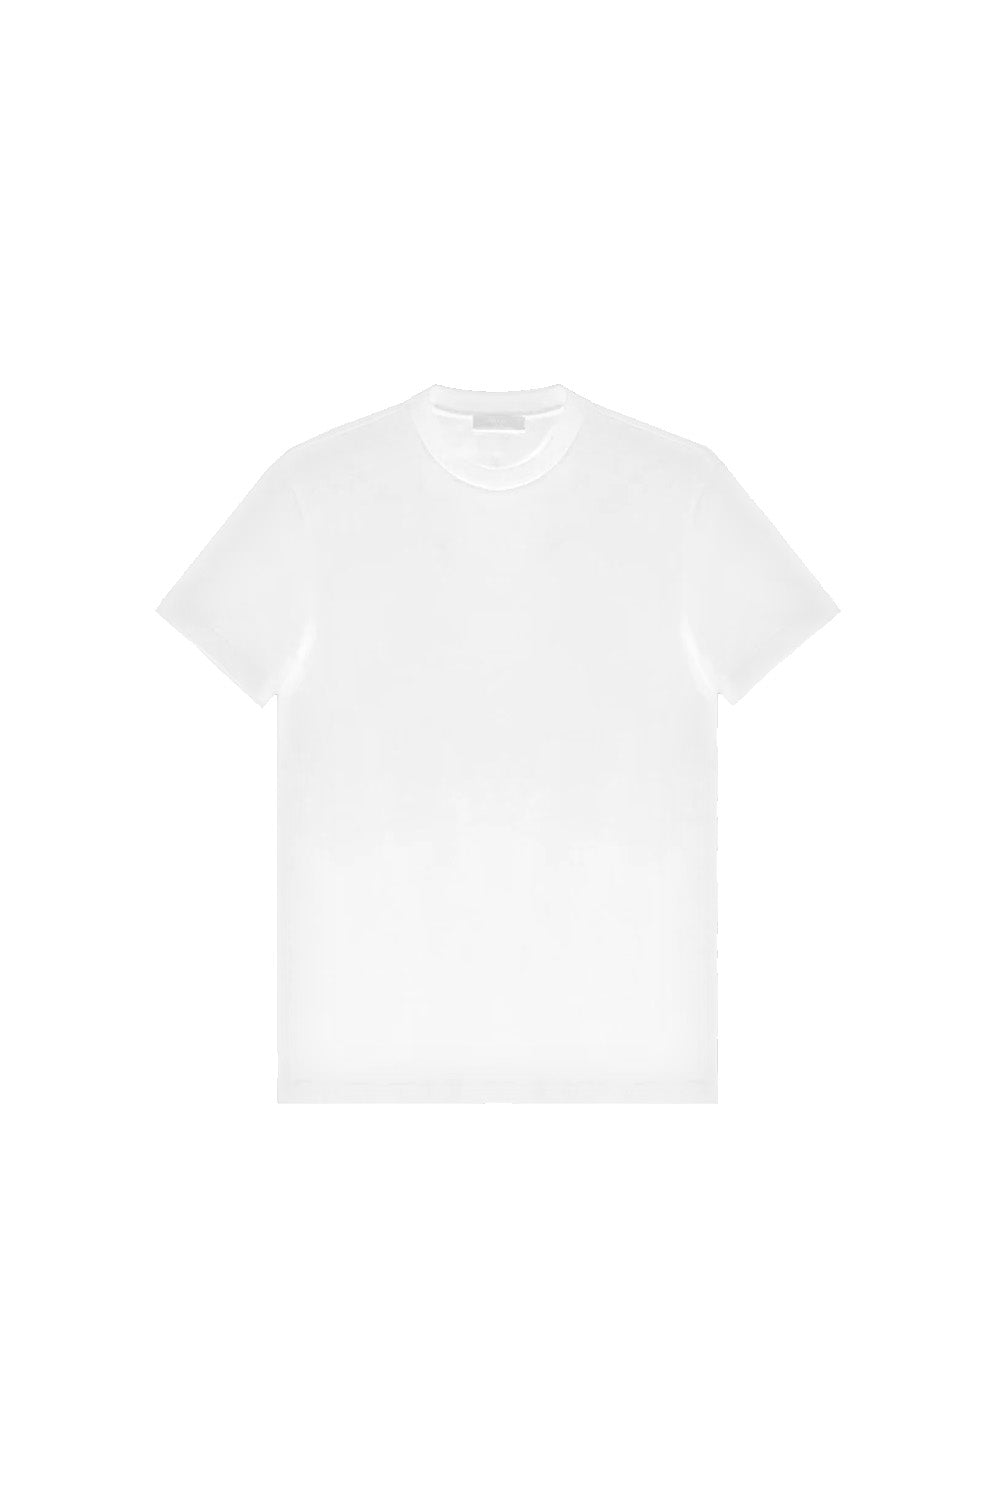 PRADA cotton t-shirt white